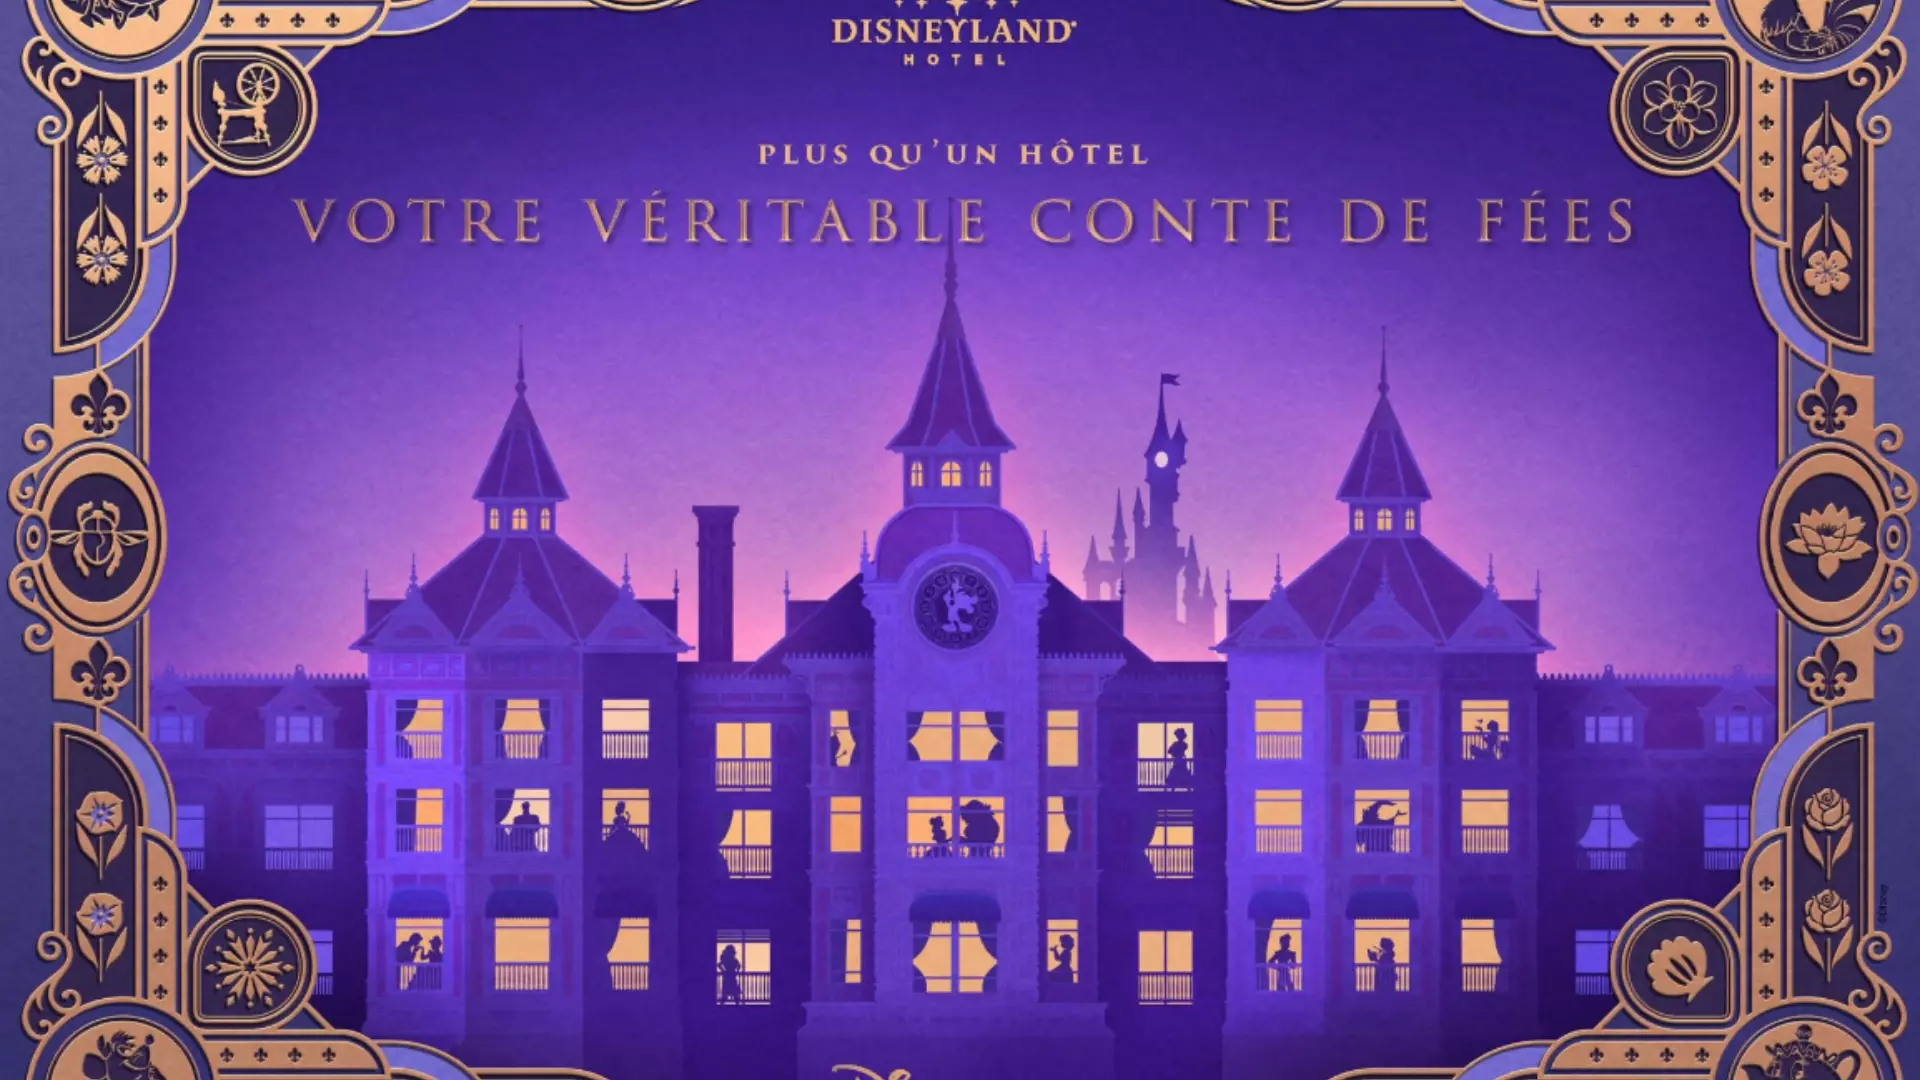 Renaissance du Disneyland Hotel - Disneyland Paris